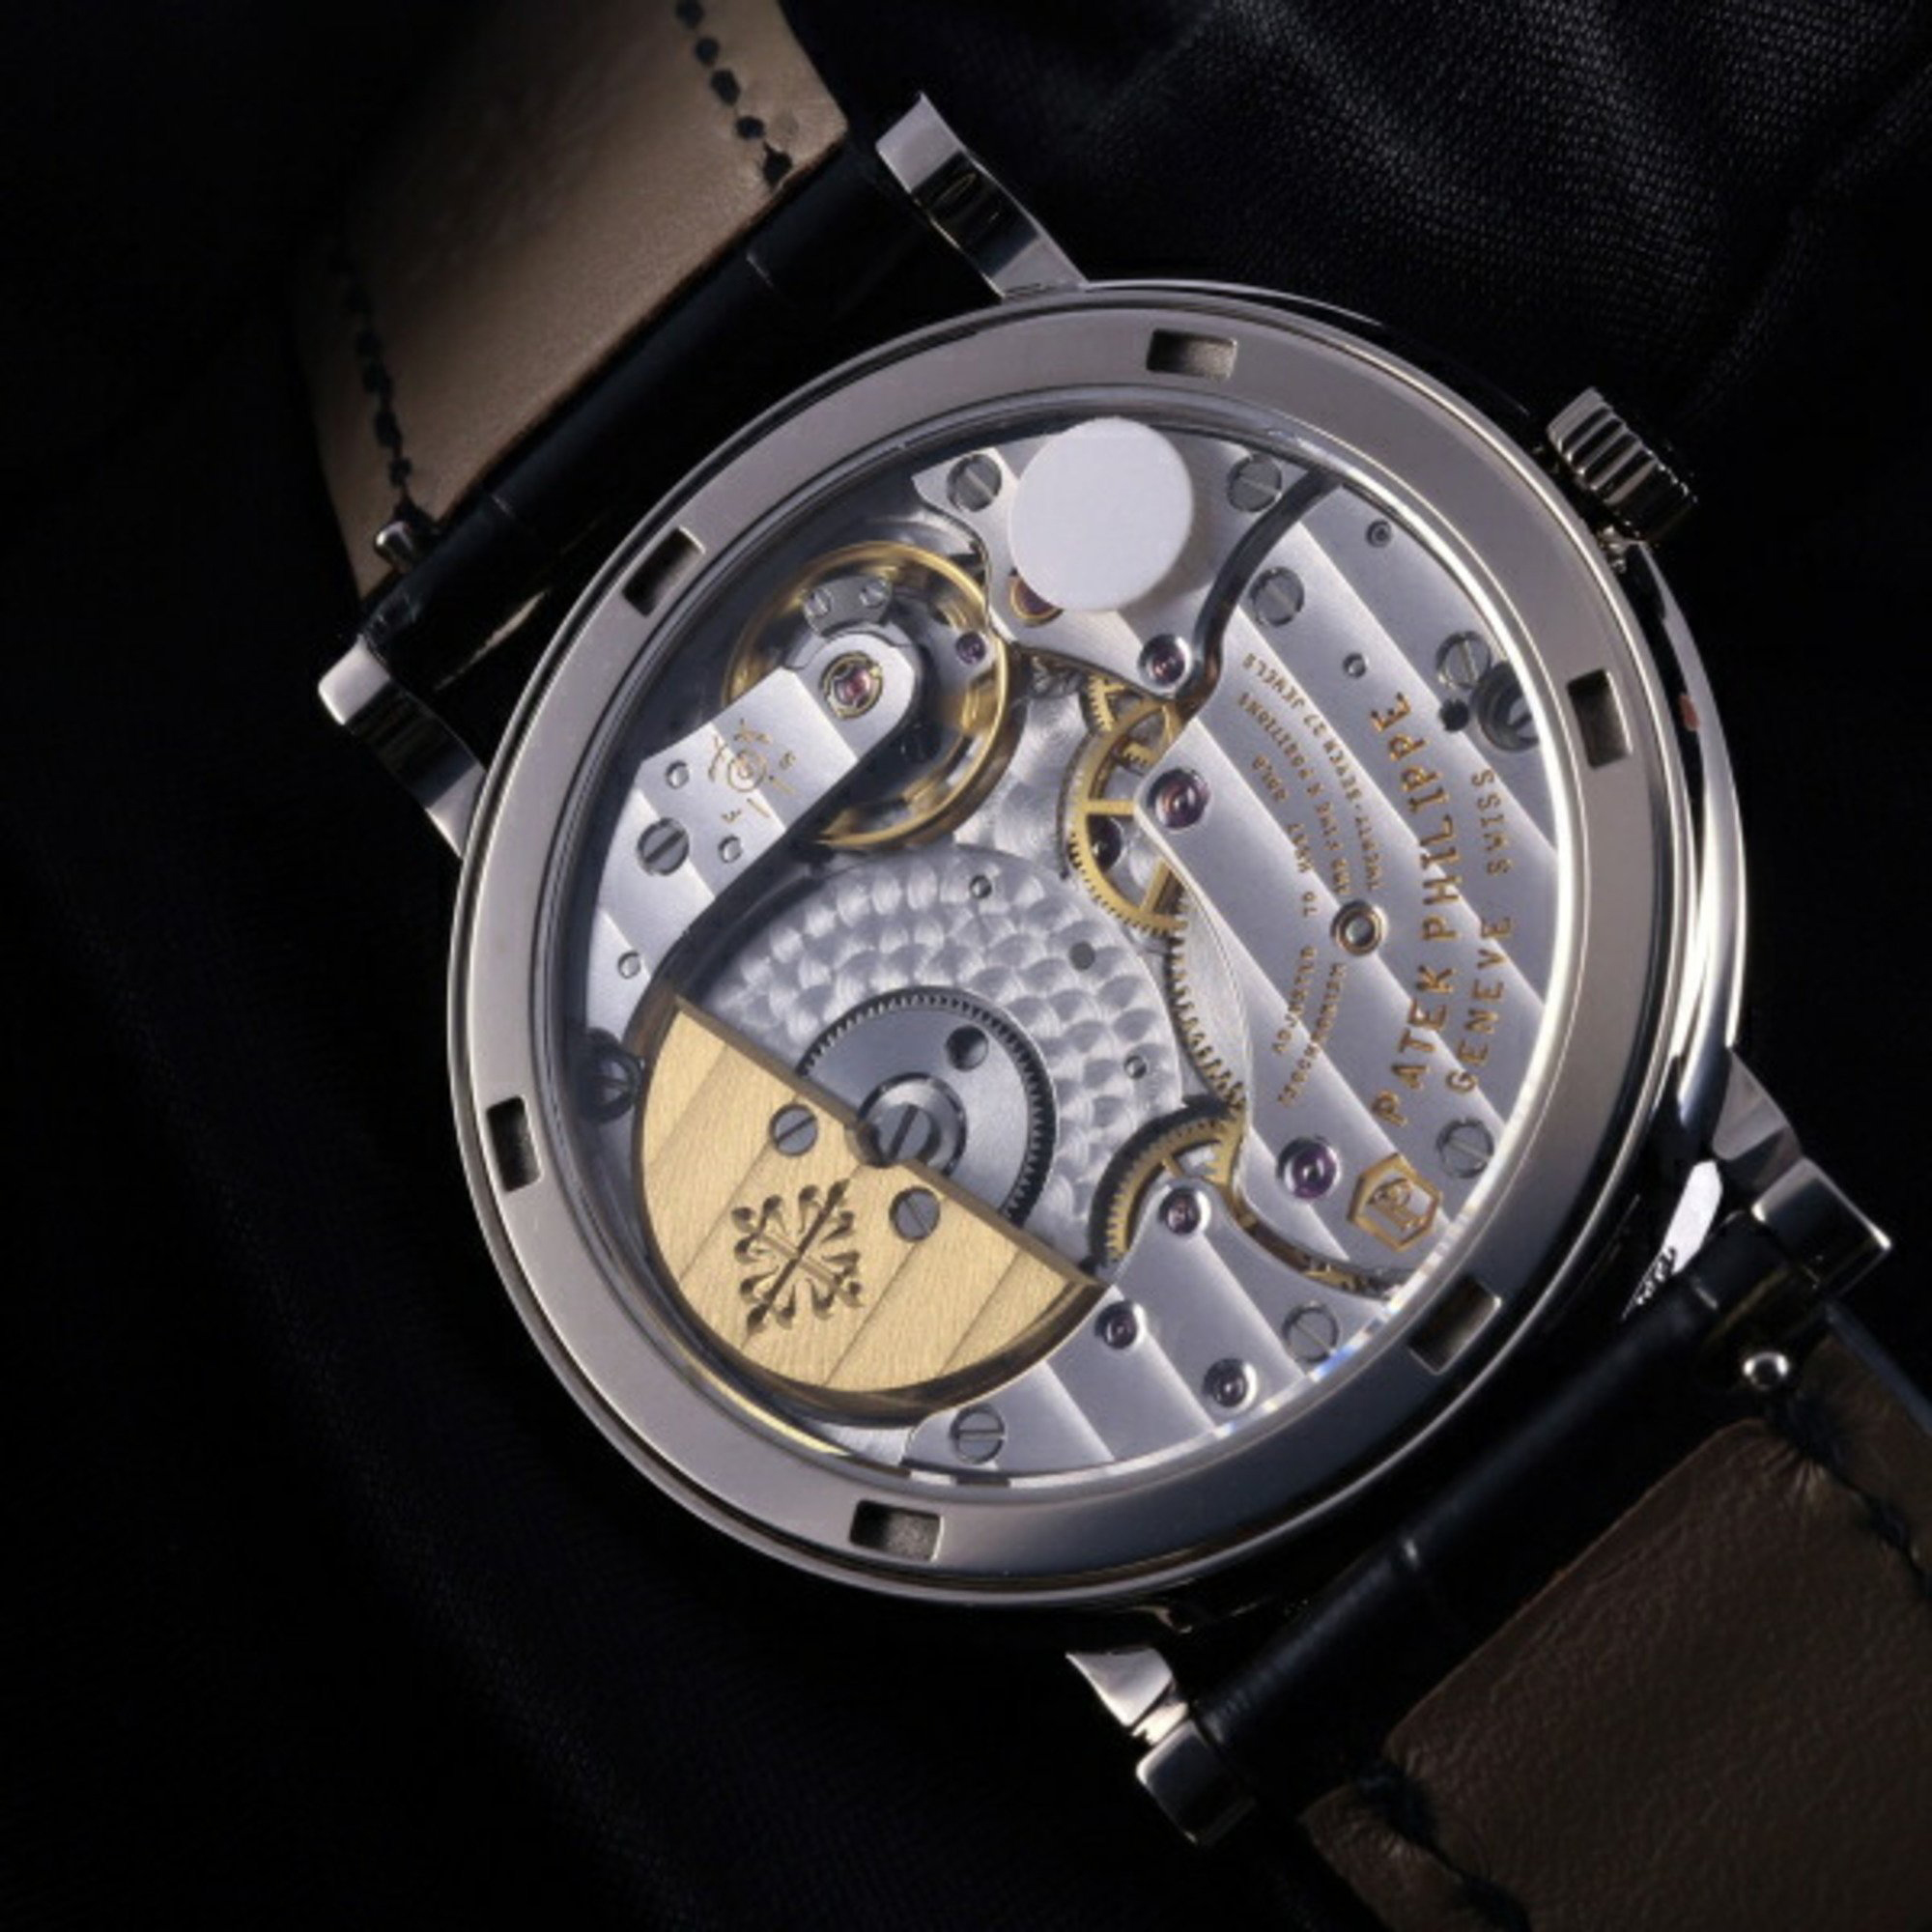 Patek Philippe White 18k White Gold Calatrava 5120G-001 Automatic Men's Wristwatch 35 Mm